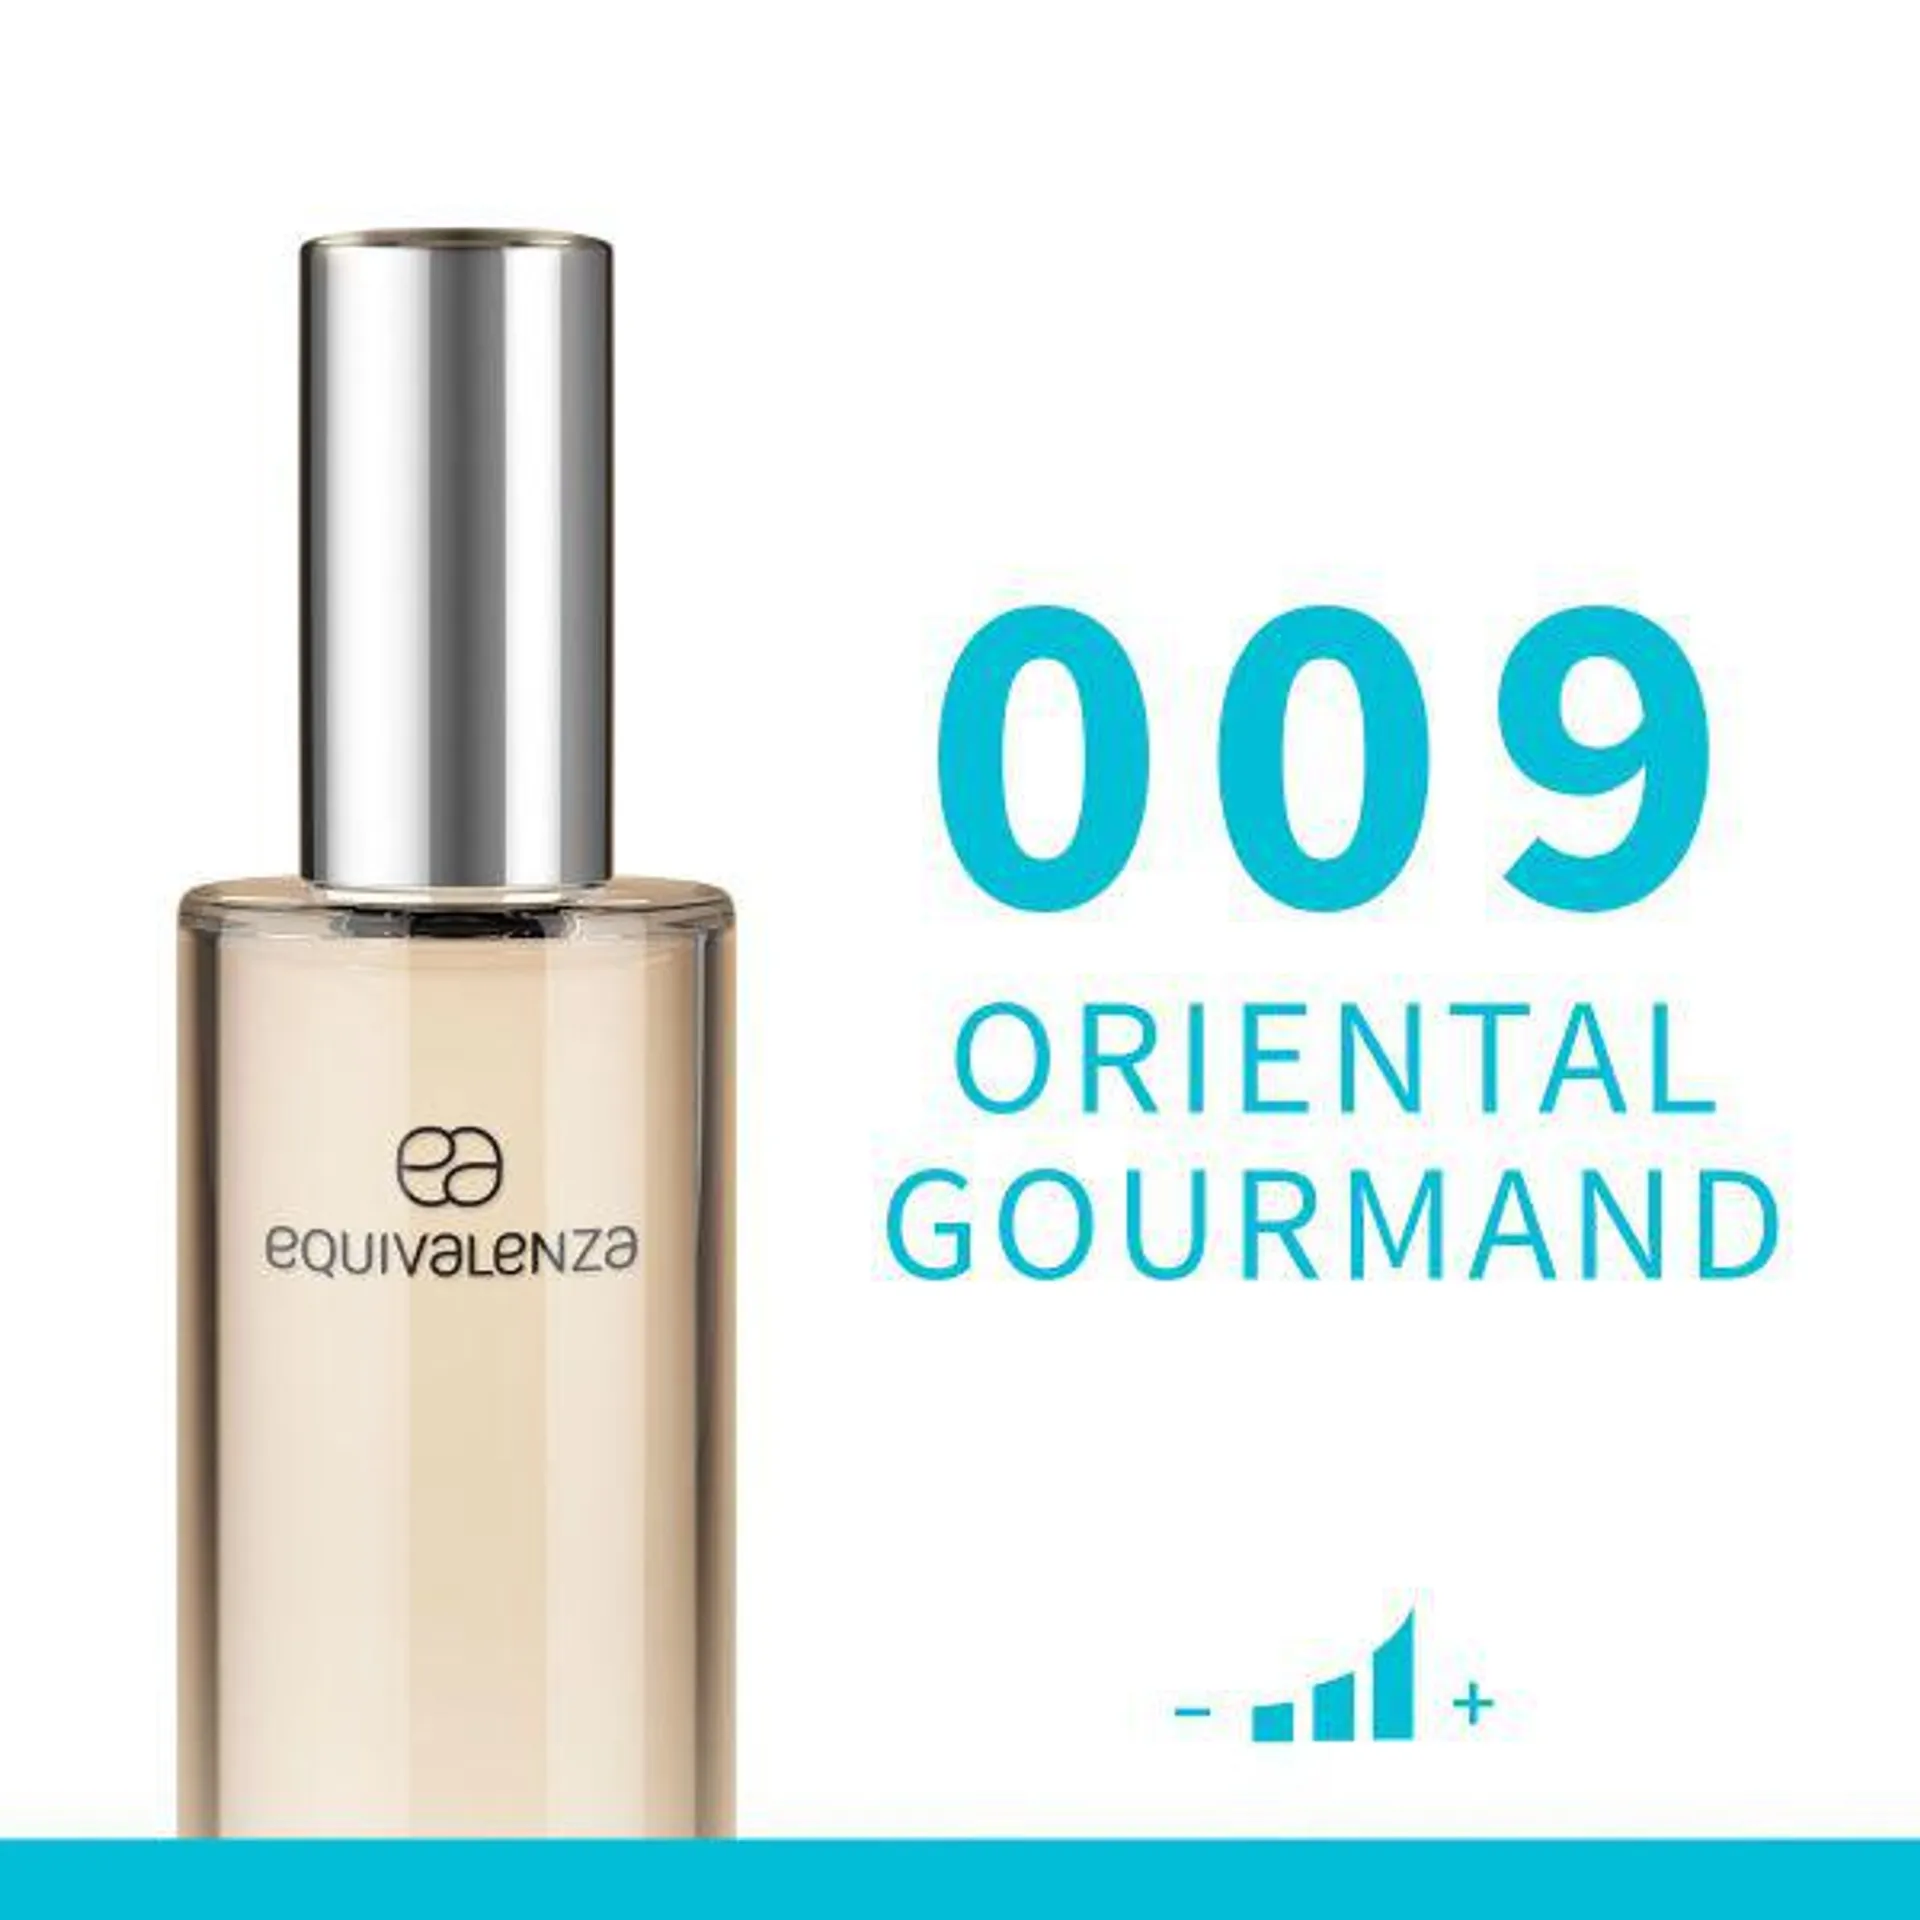 Oriental Gourmand 009